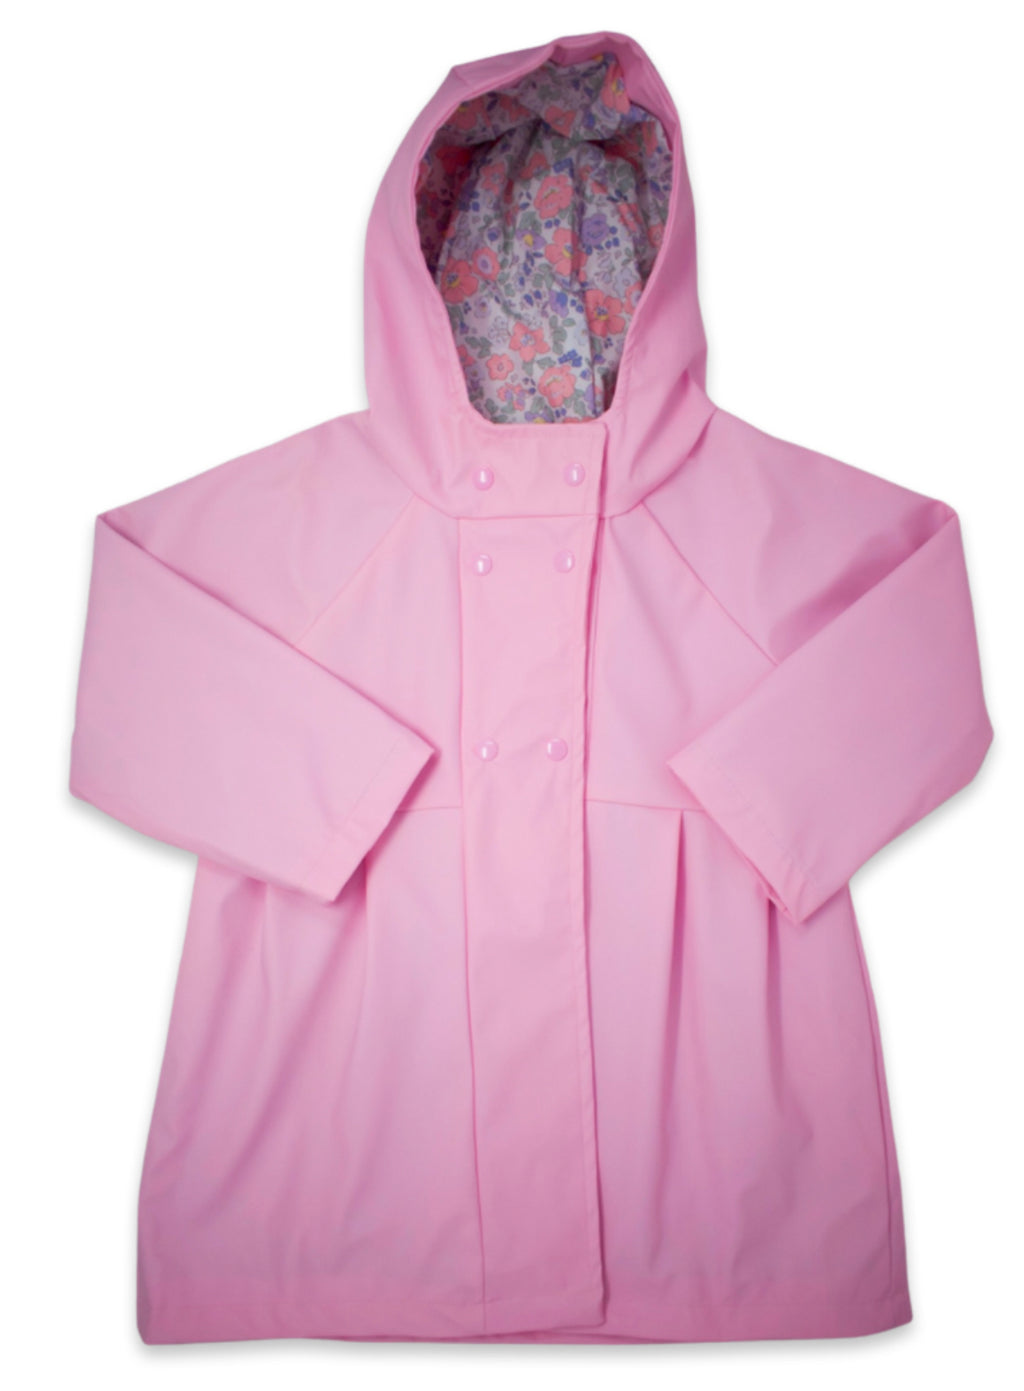 Rainy day raincoat pink